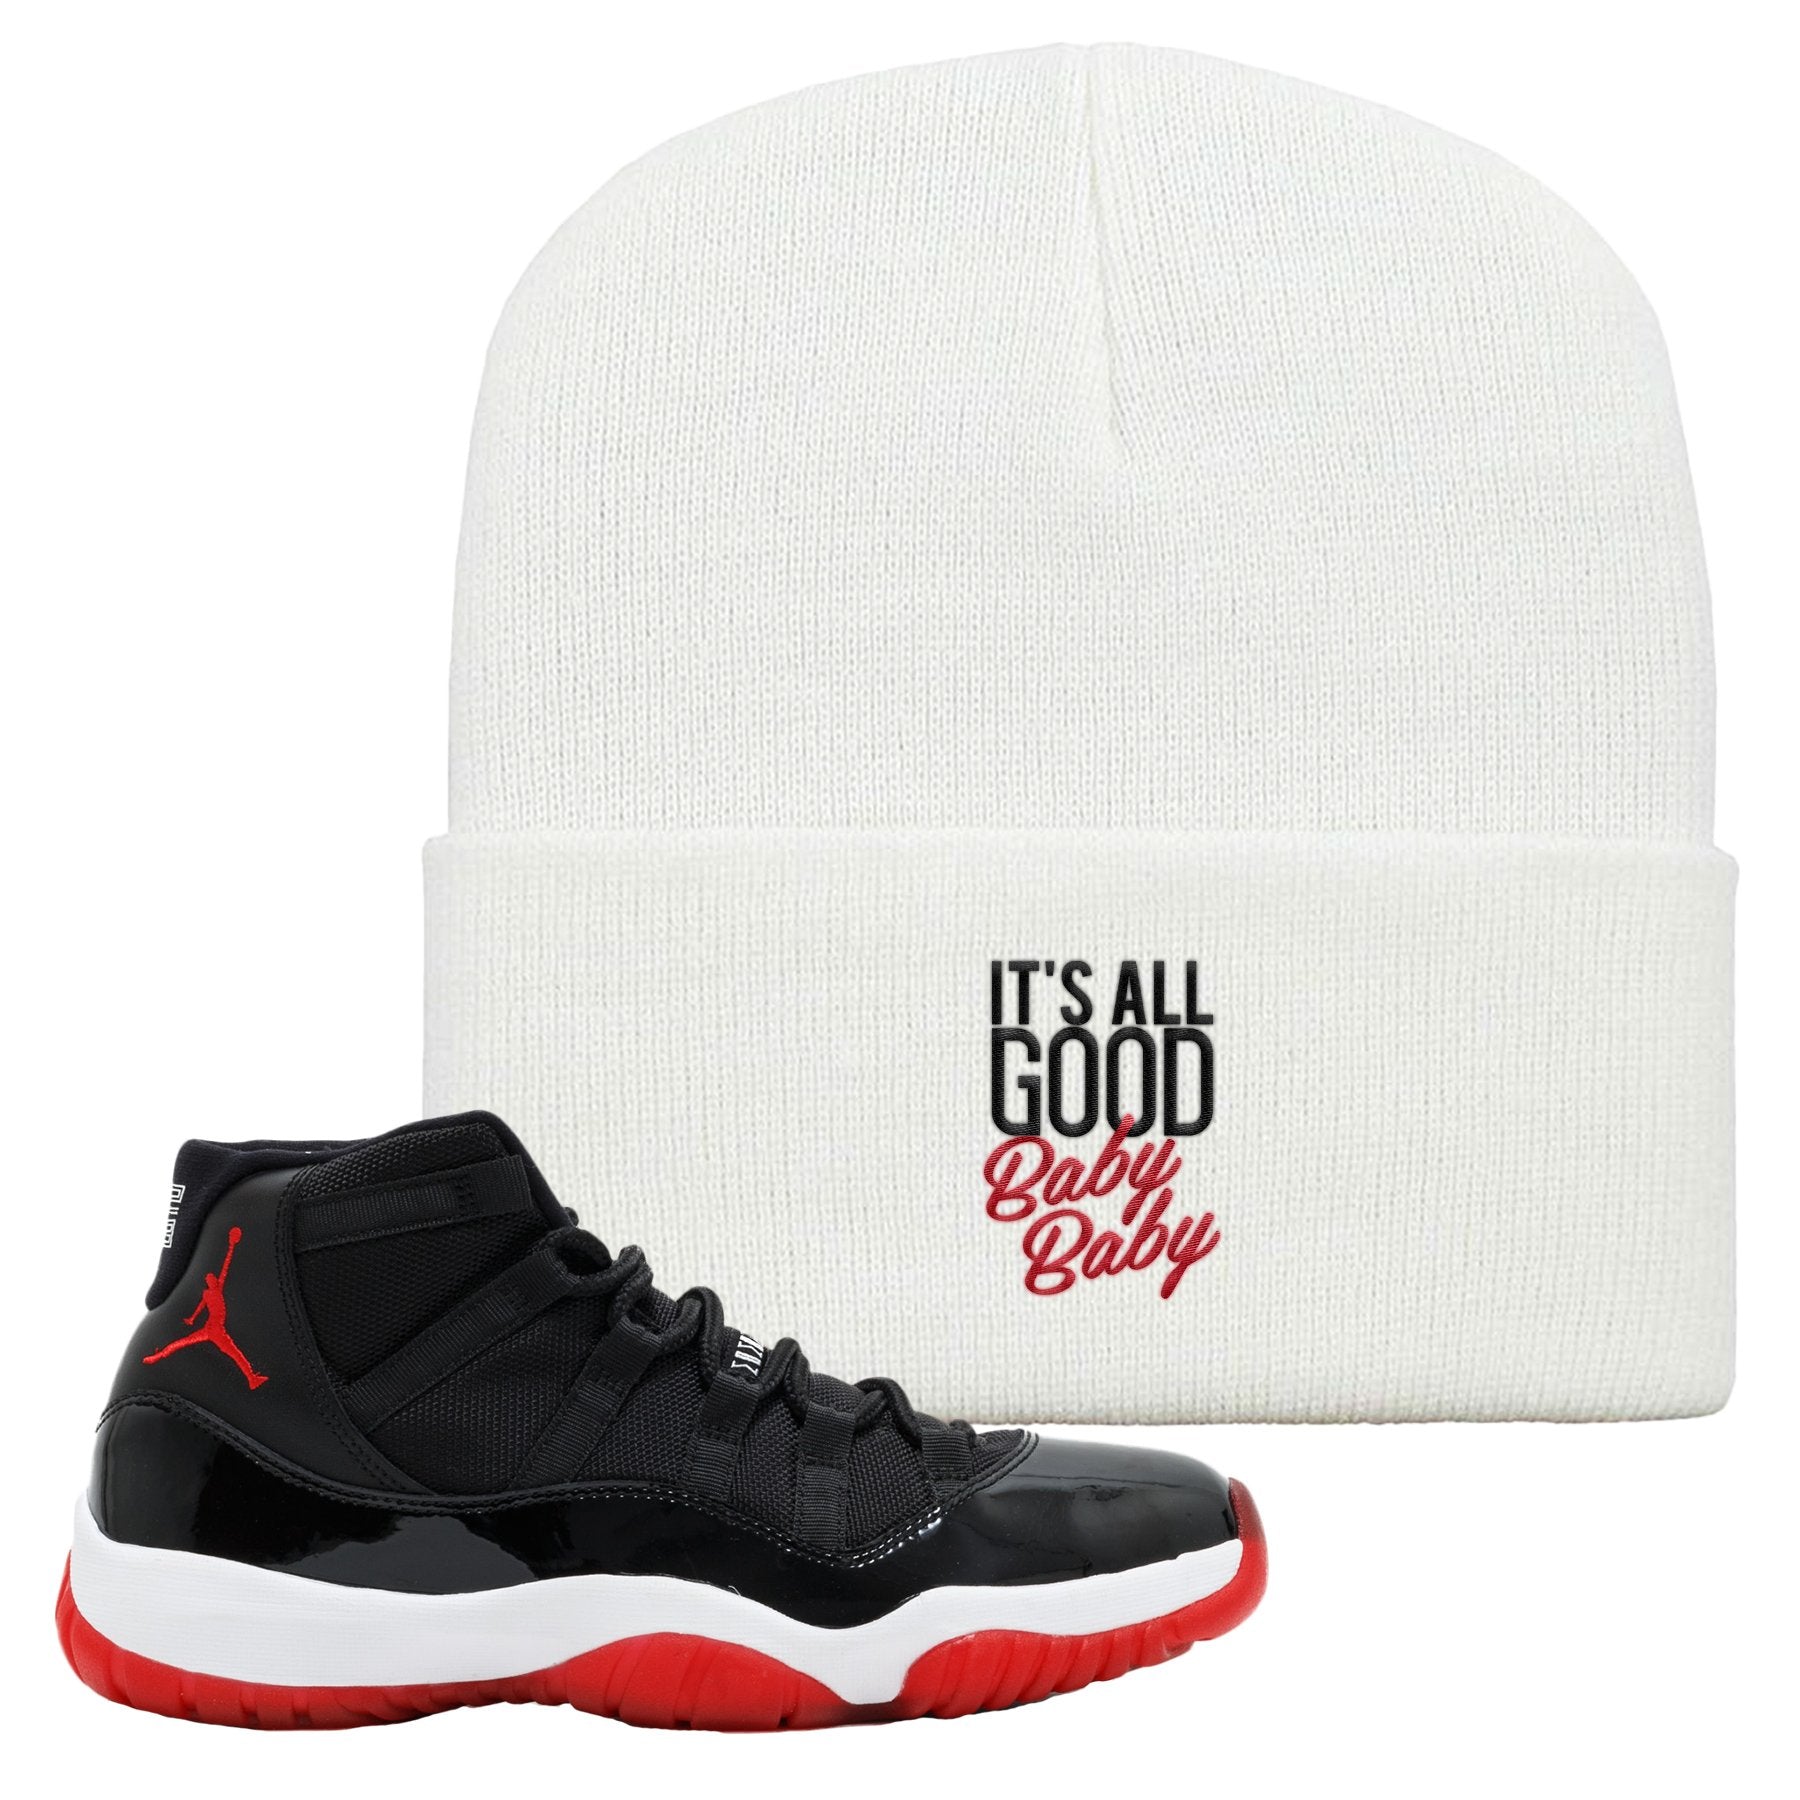 Jordan 11 Bred It's All Good Baby Baby White Sneaker Hook Up Beanie